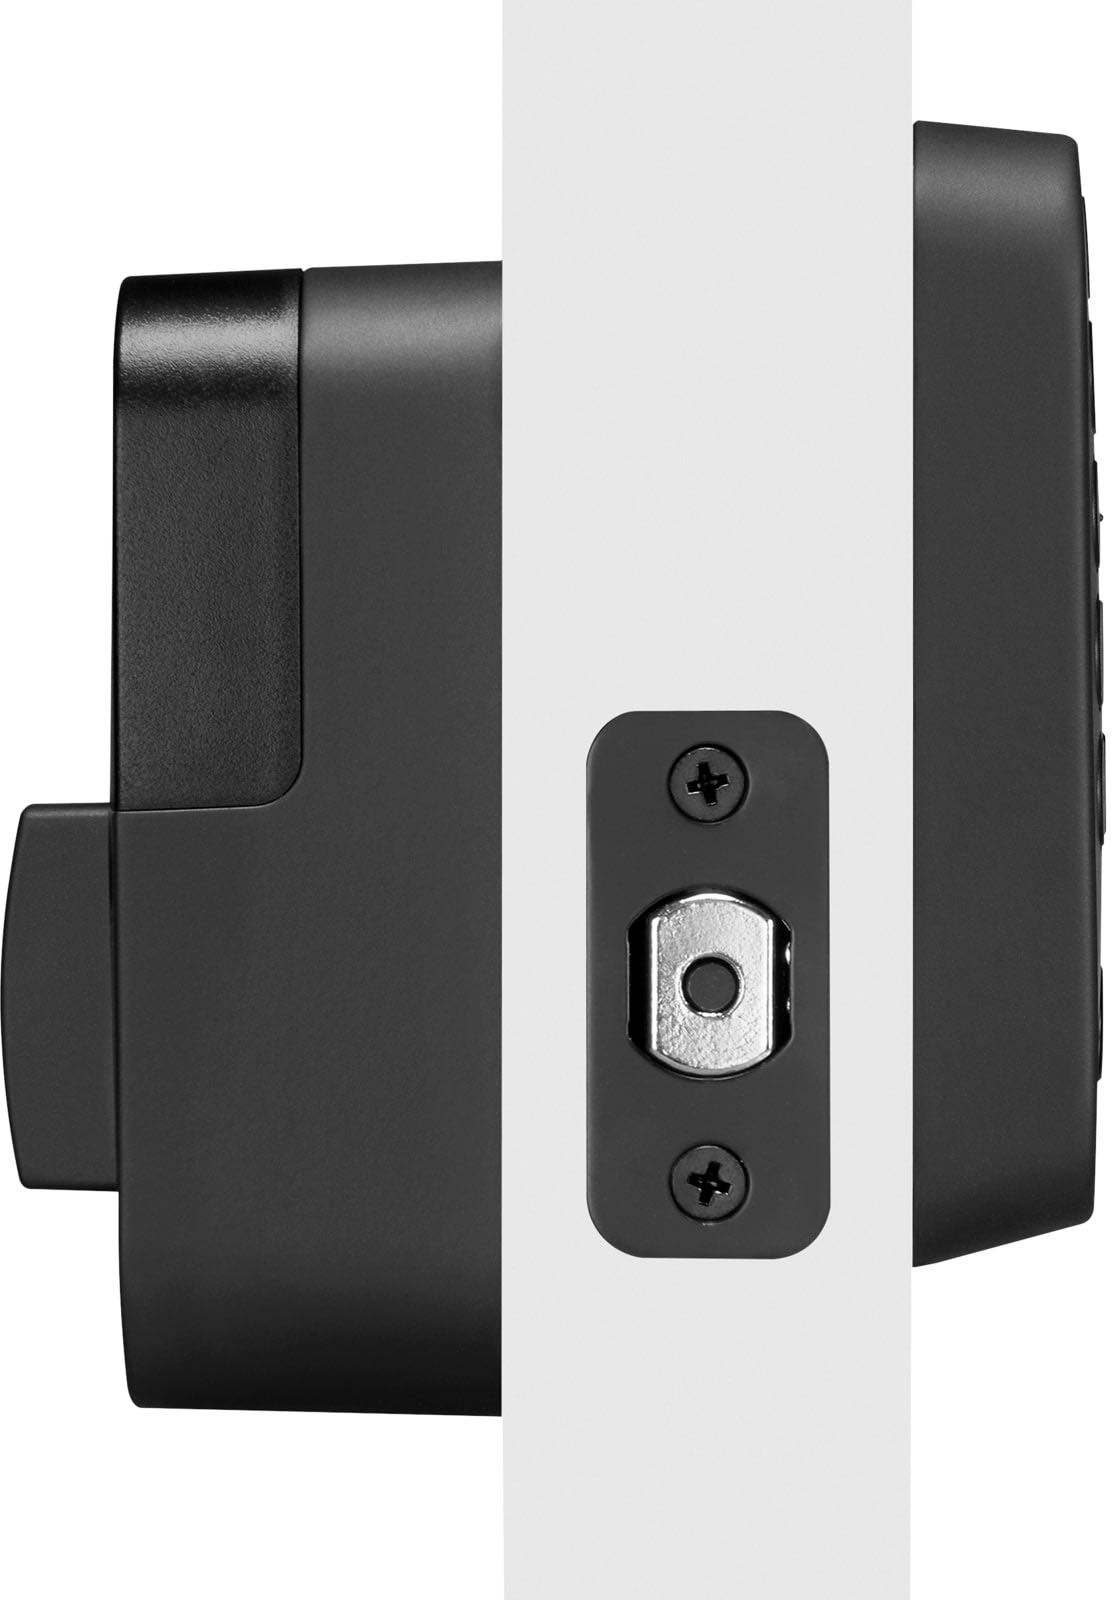 Angle View: Yale - Assure Lock 2 Smart Lock W-Fi Deadbolt with App/Keypad/Key Access - Black Suede